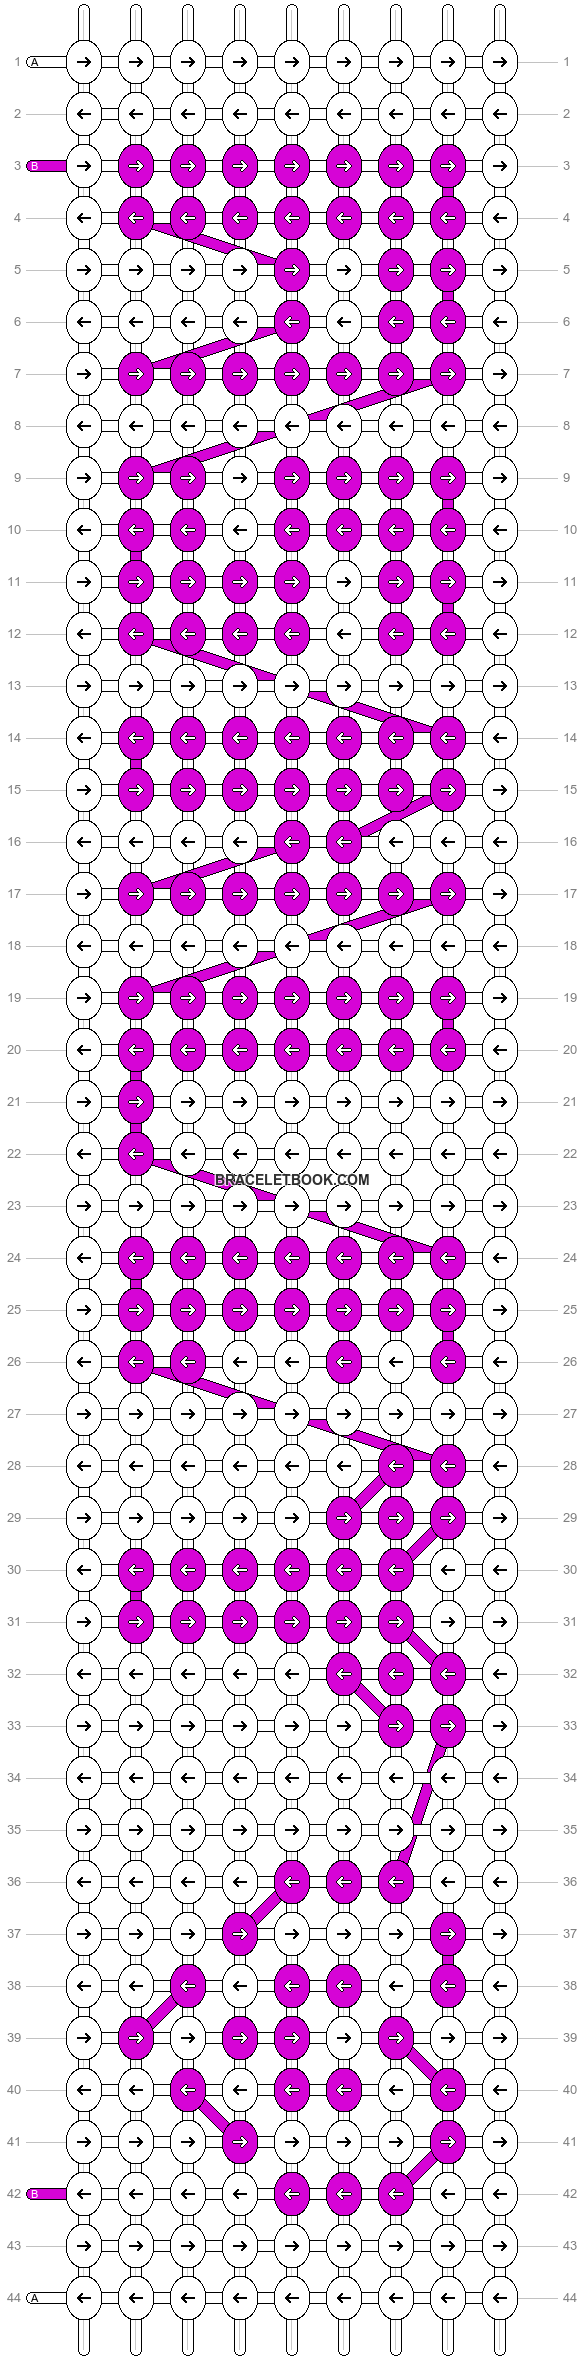 Alpha pattern #3582 pattern